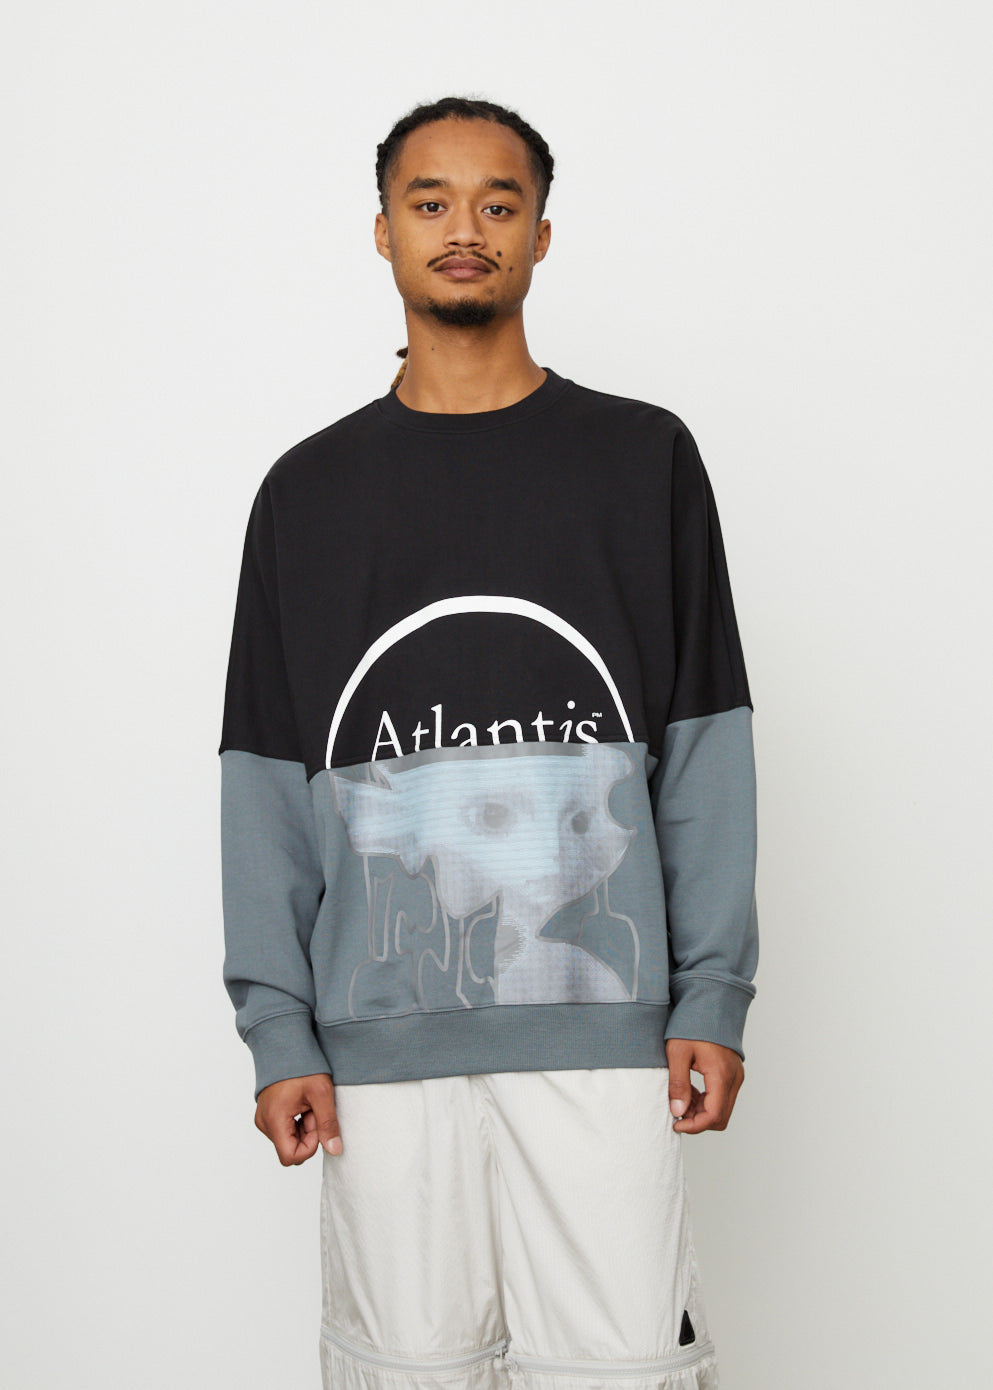 Atlantis Half Half Crew Neck Sweatshirt